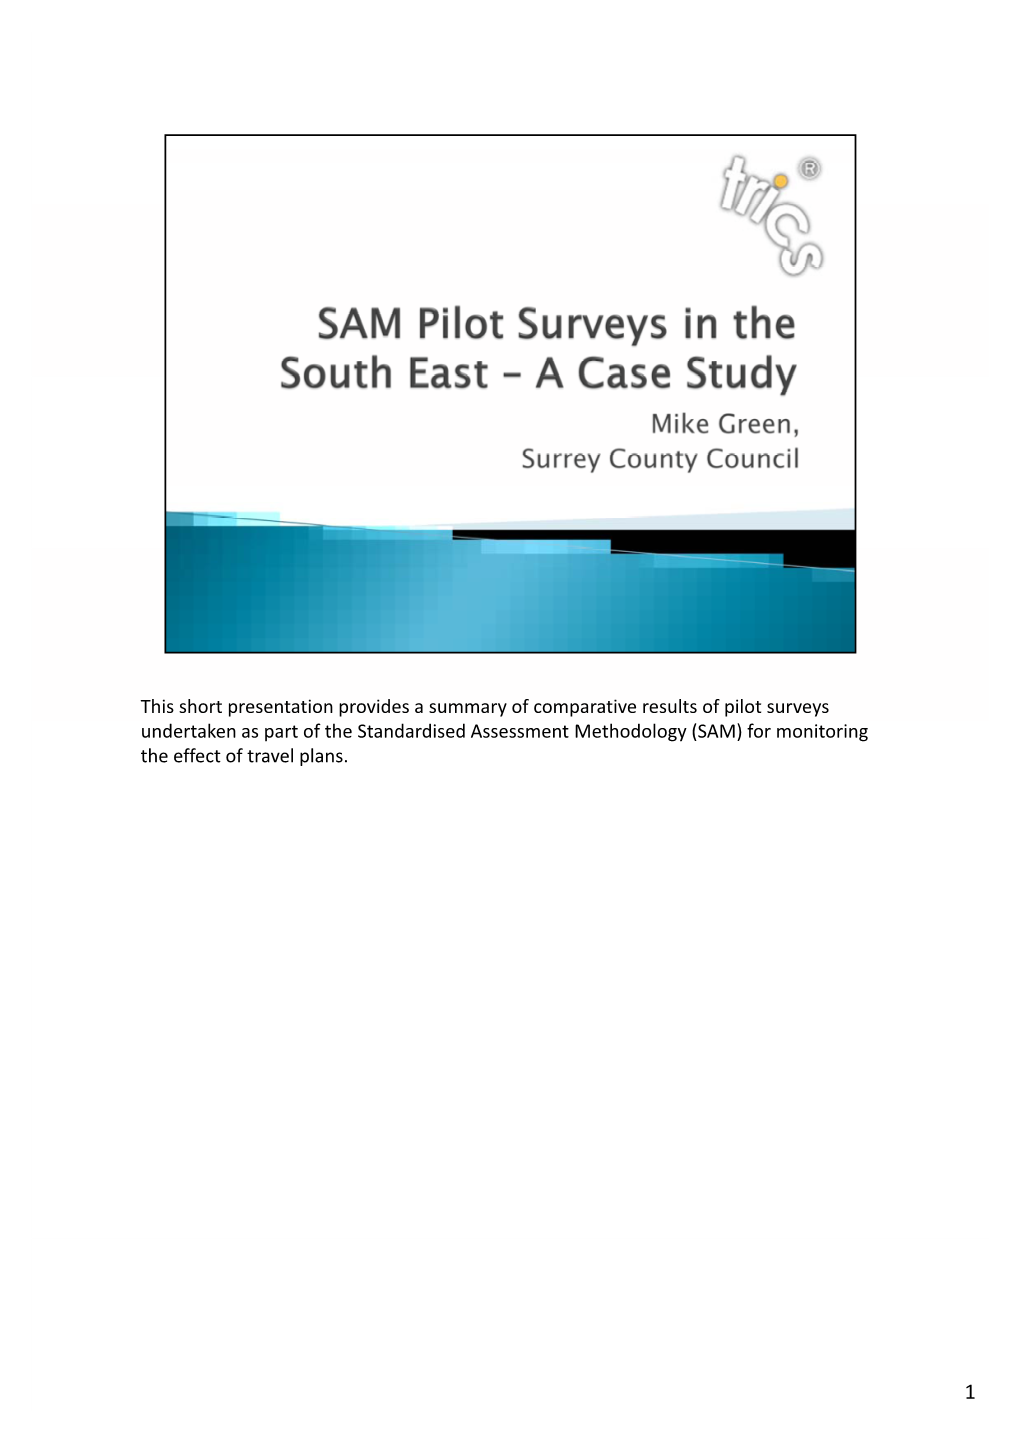 SAM Pilot Surveys in the South East